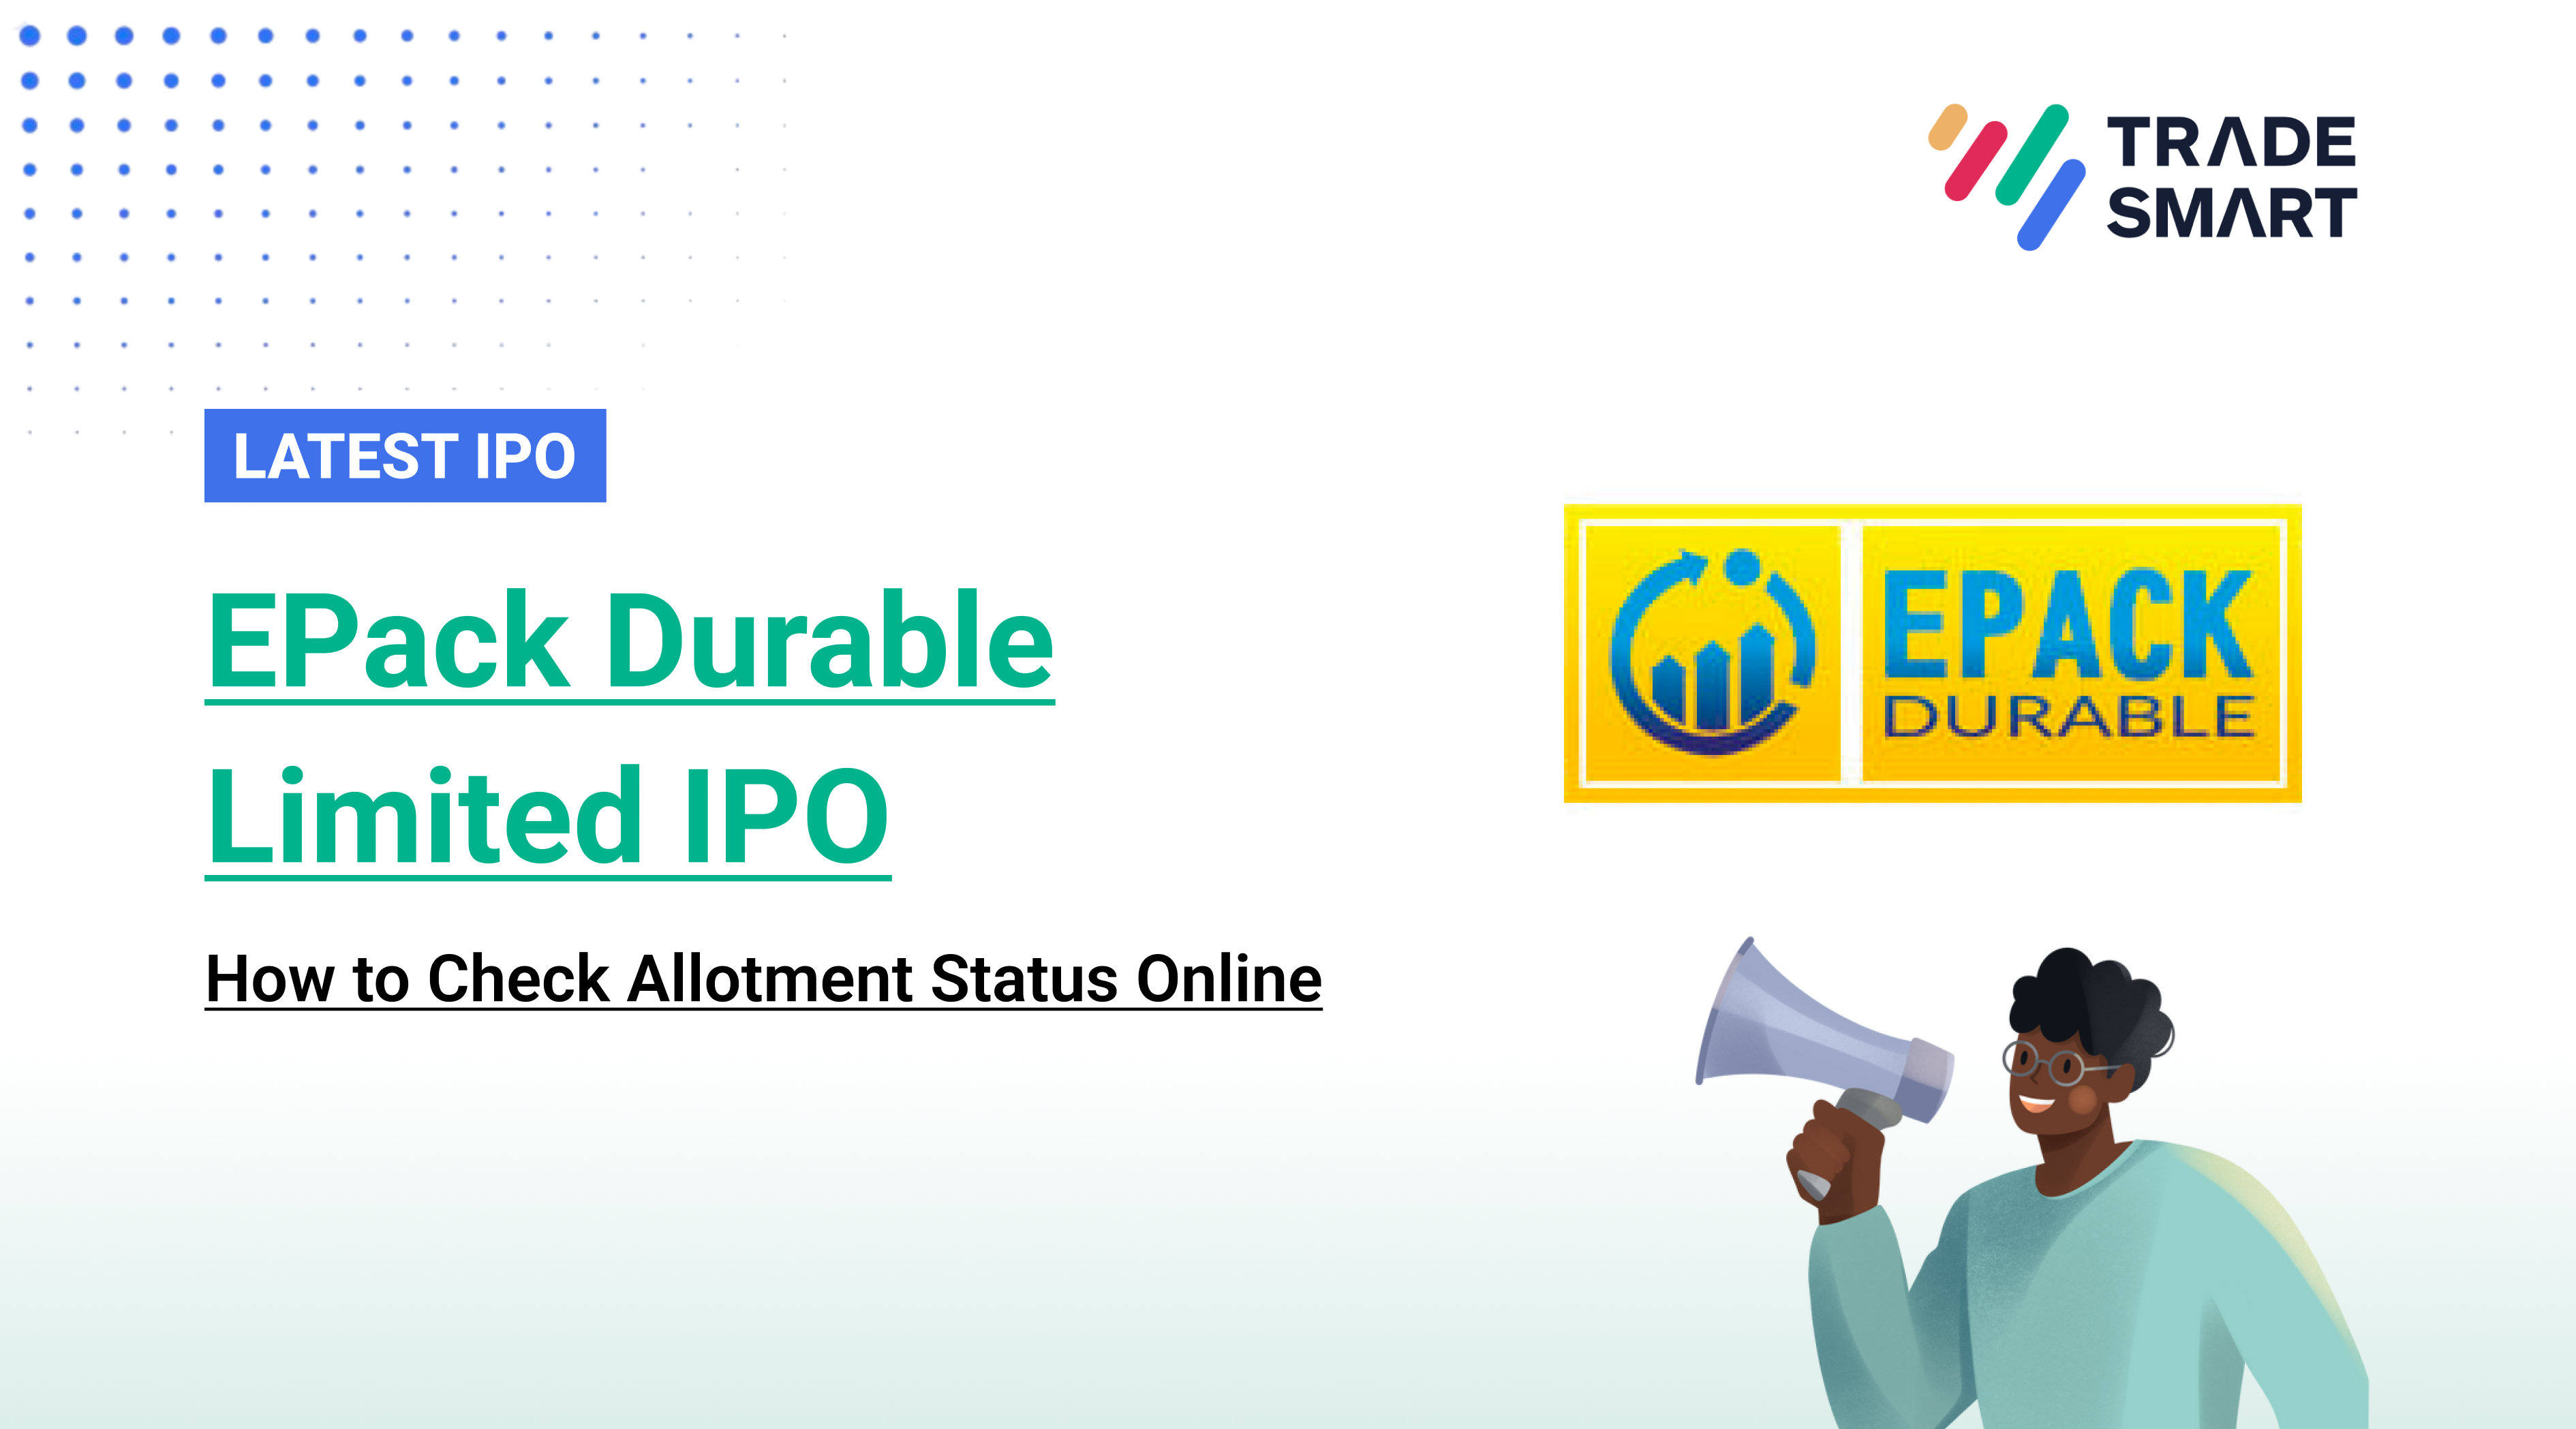 EPACK Durable IPO Allotment status